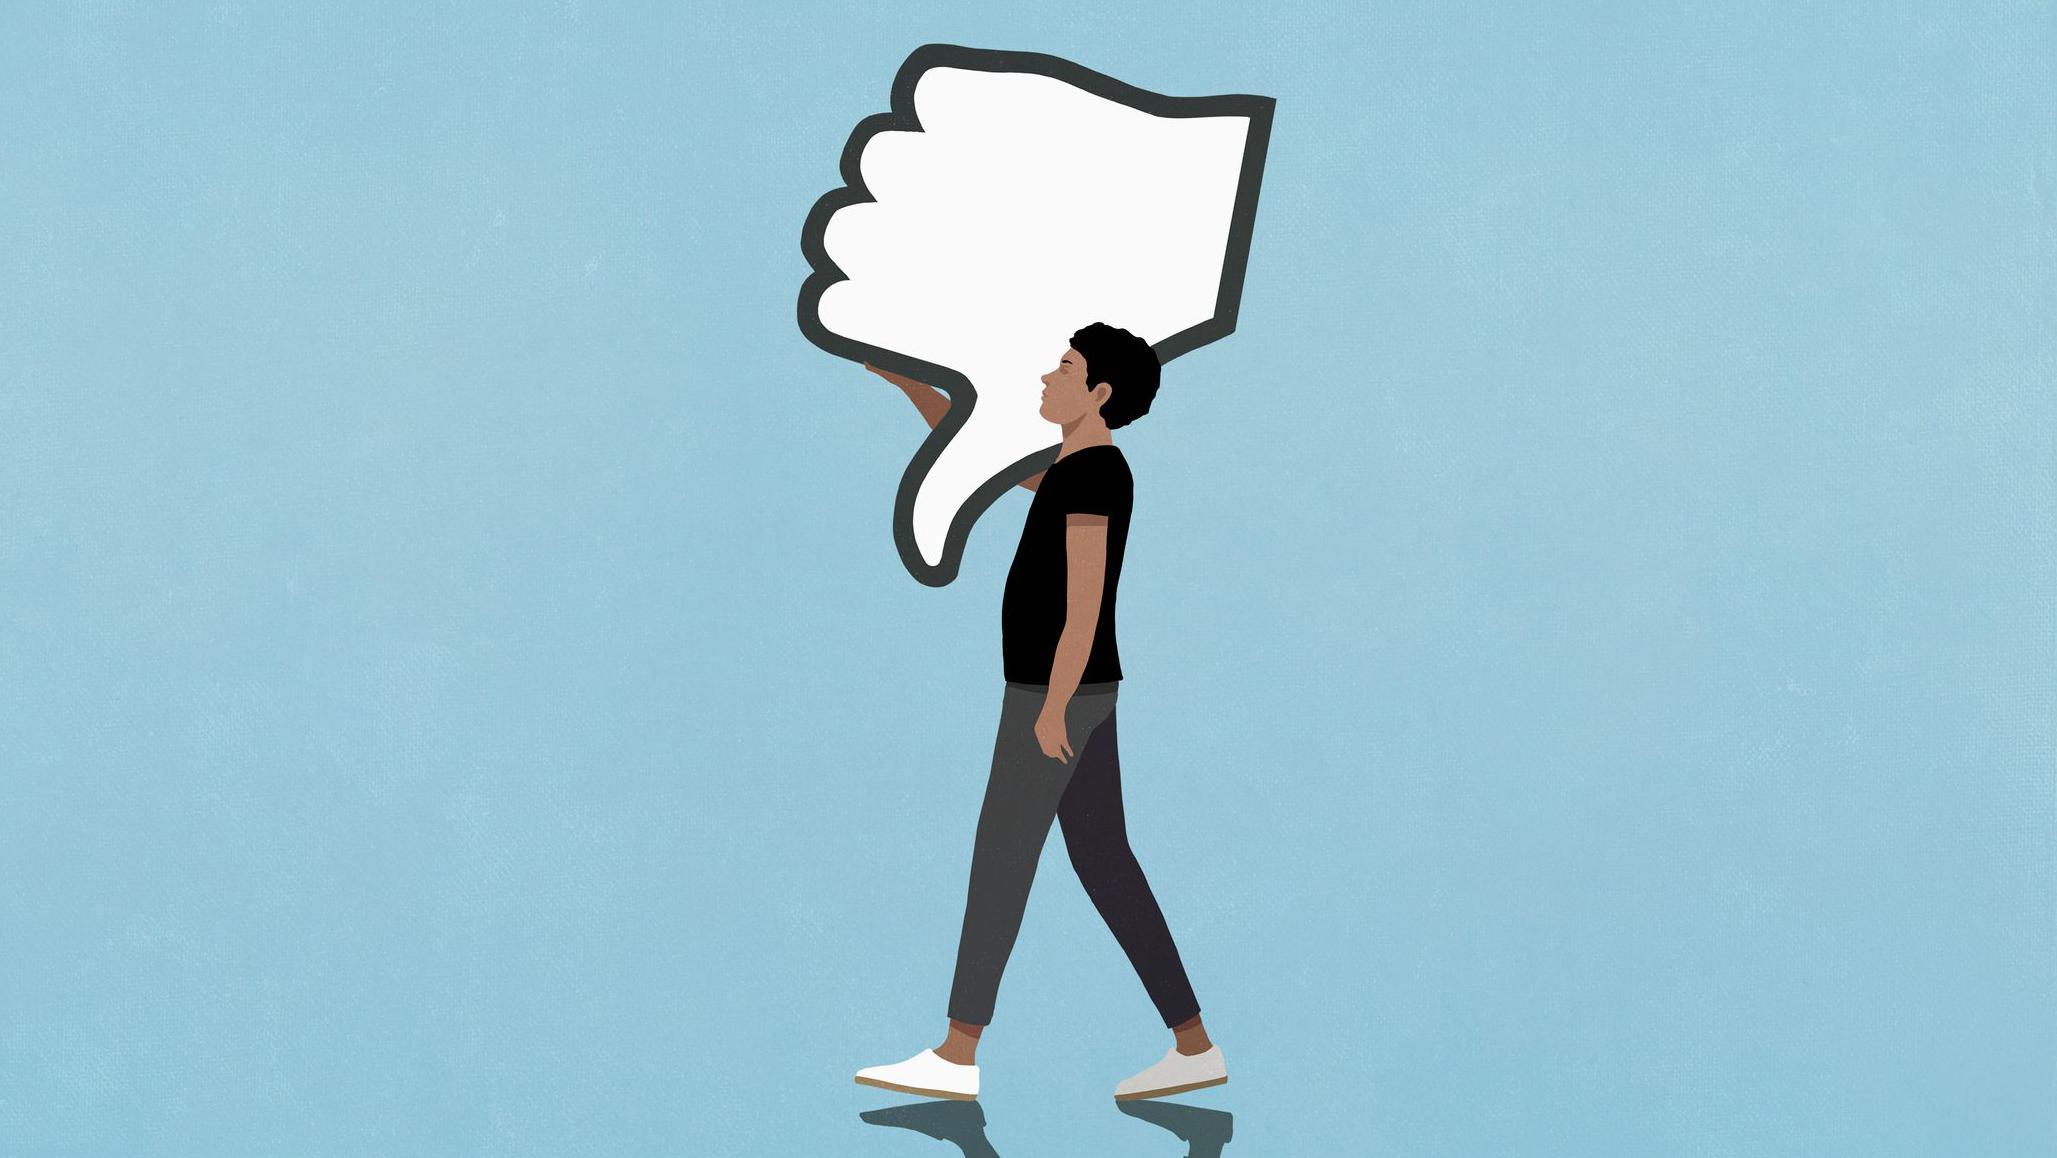 Cartoon man carries a large cutout of a thumbs-down emoji